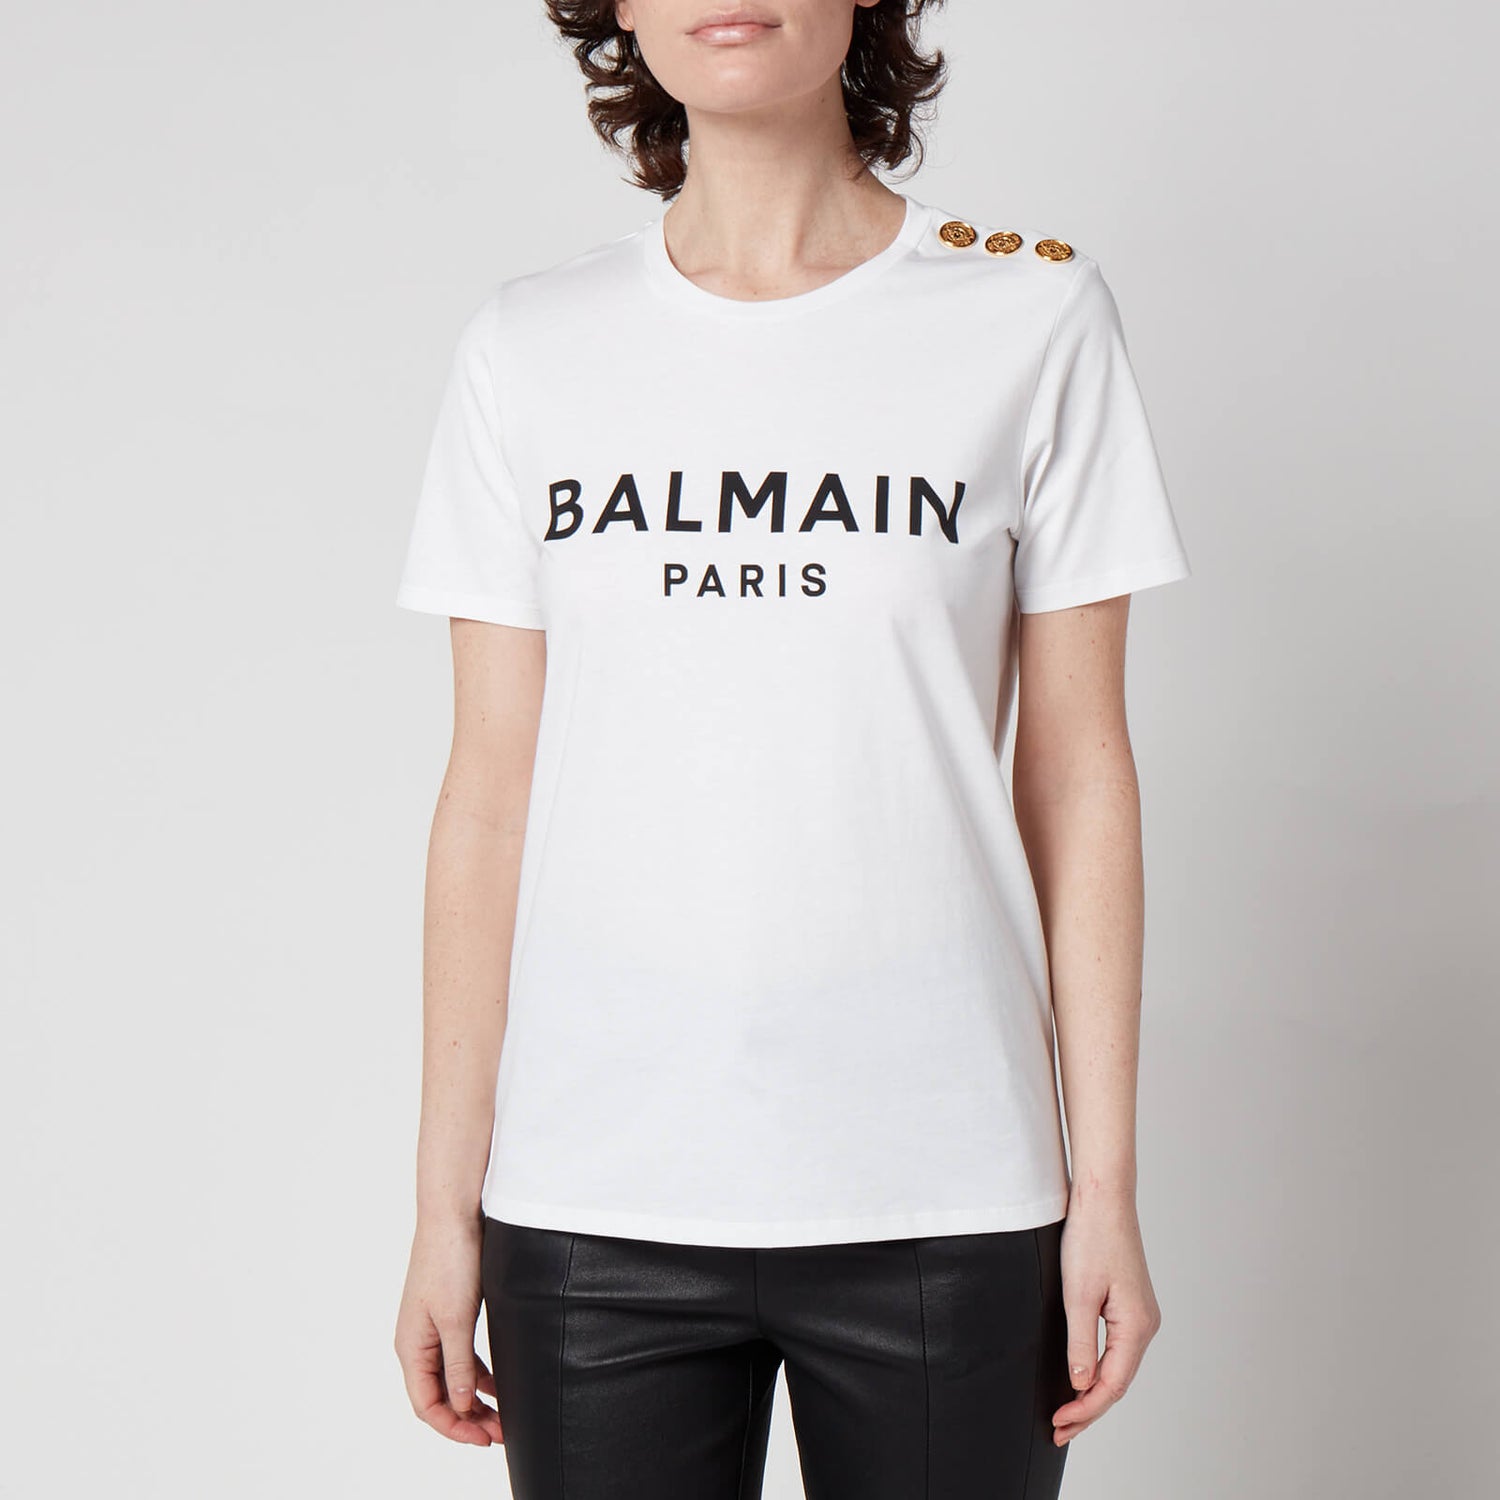 Balmain Women's 3 Button Printed Balmain T-Shirt - White - XS